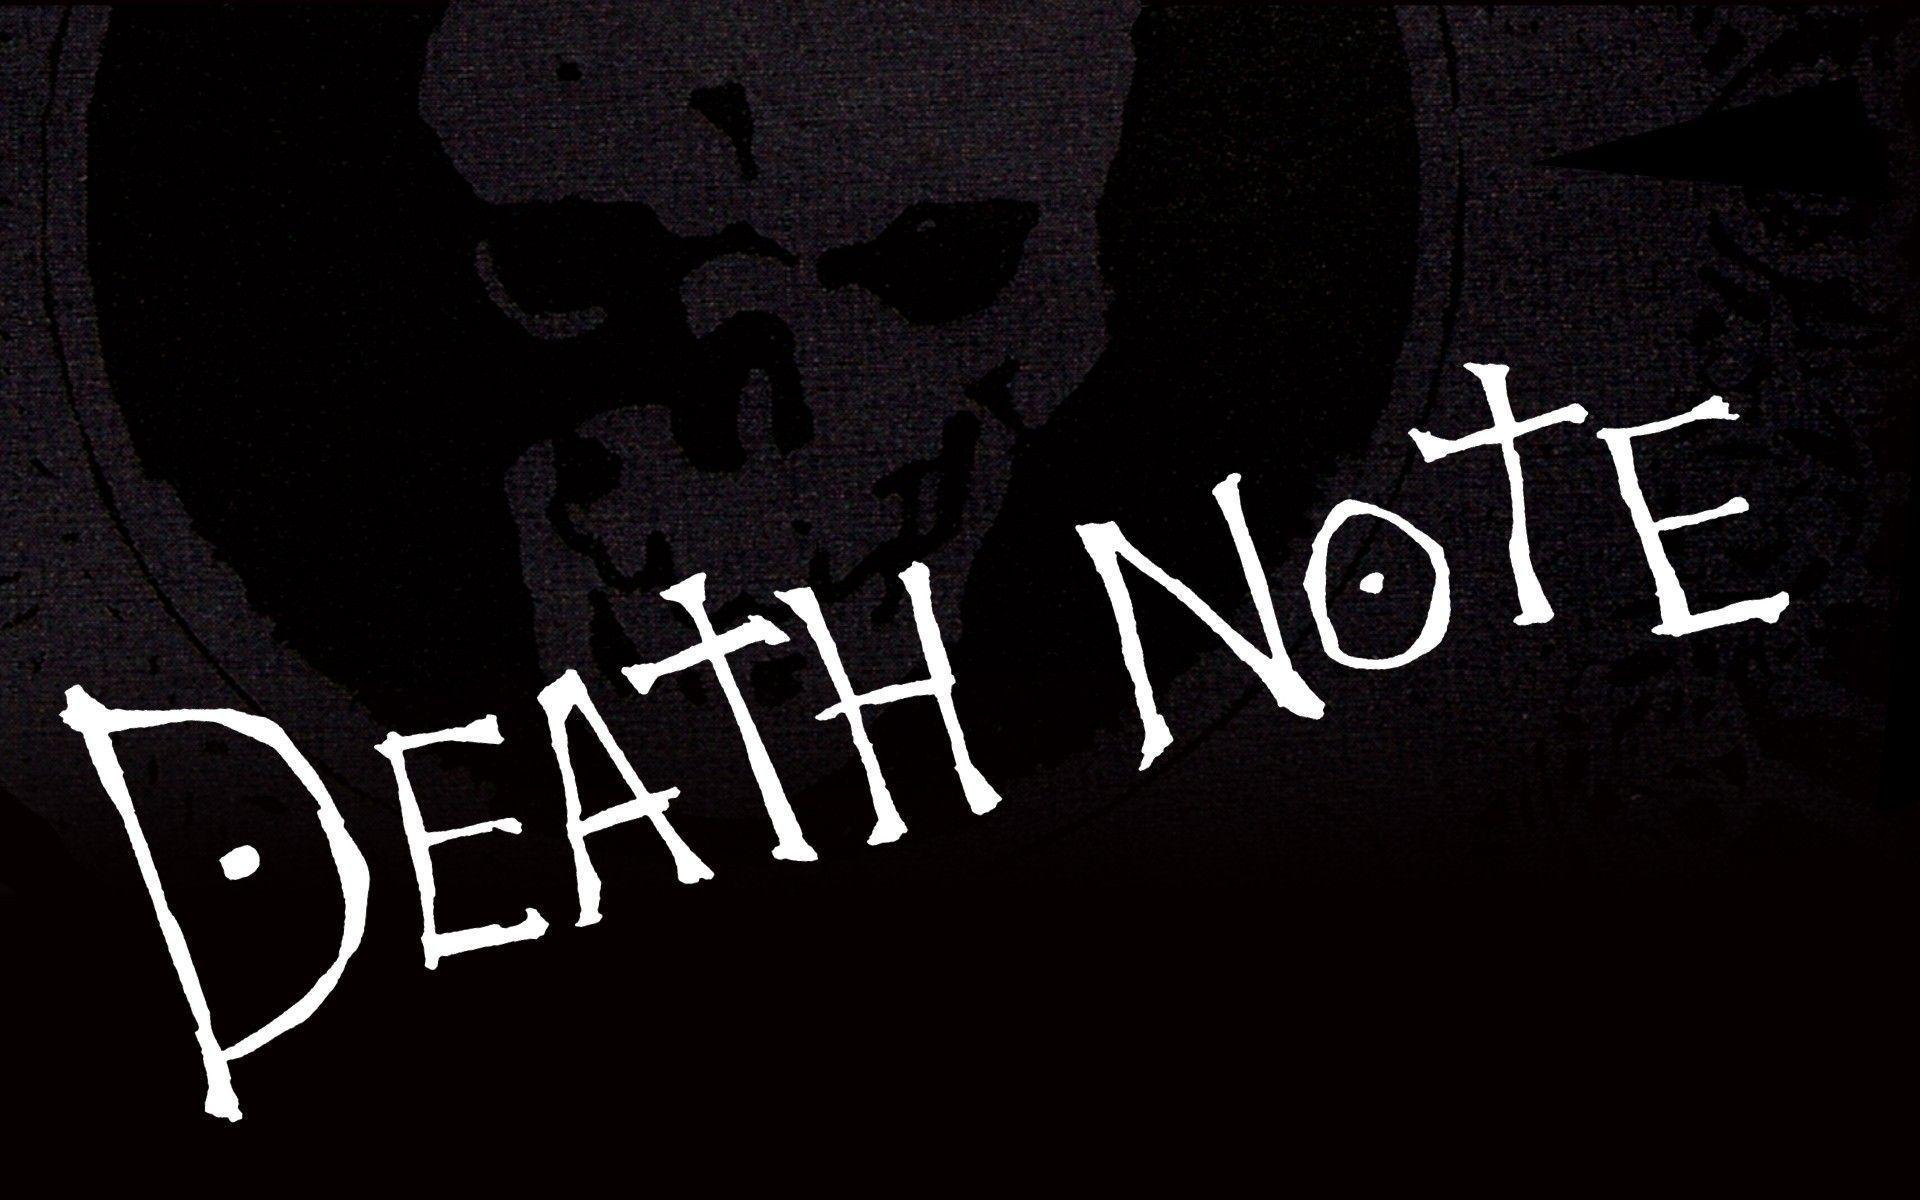 High definition Death Note wallpaper for your desktop